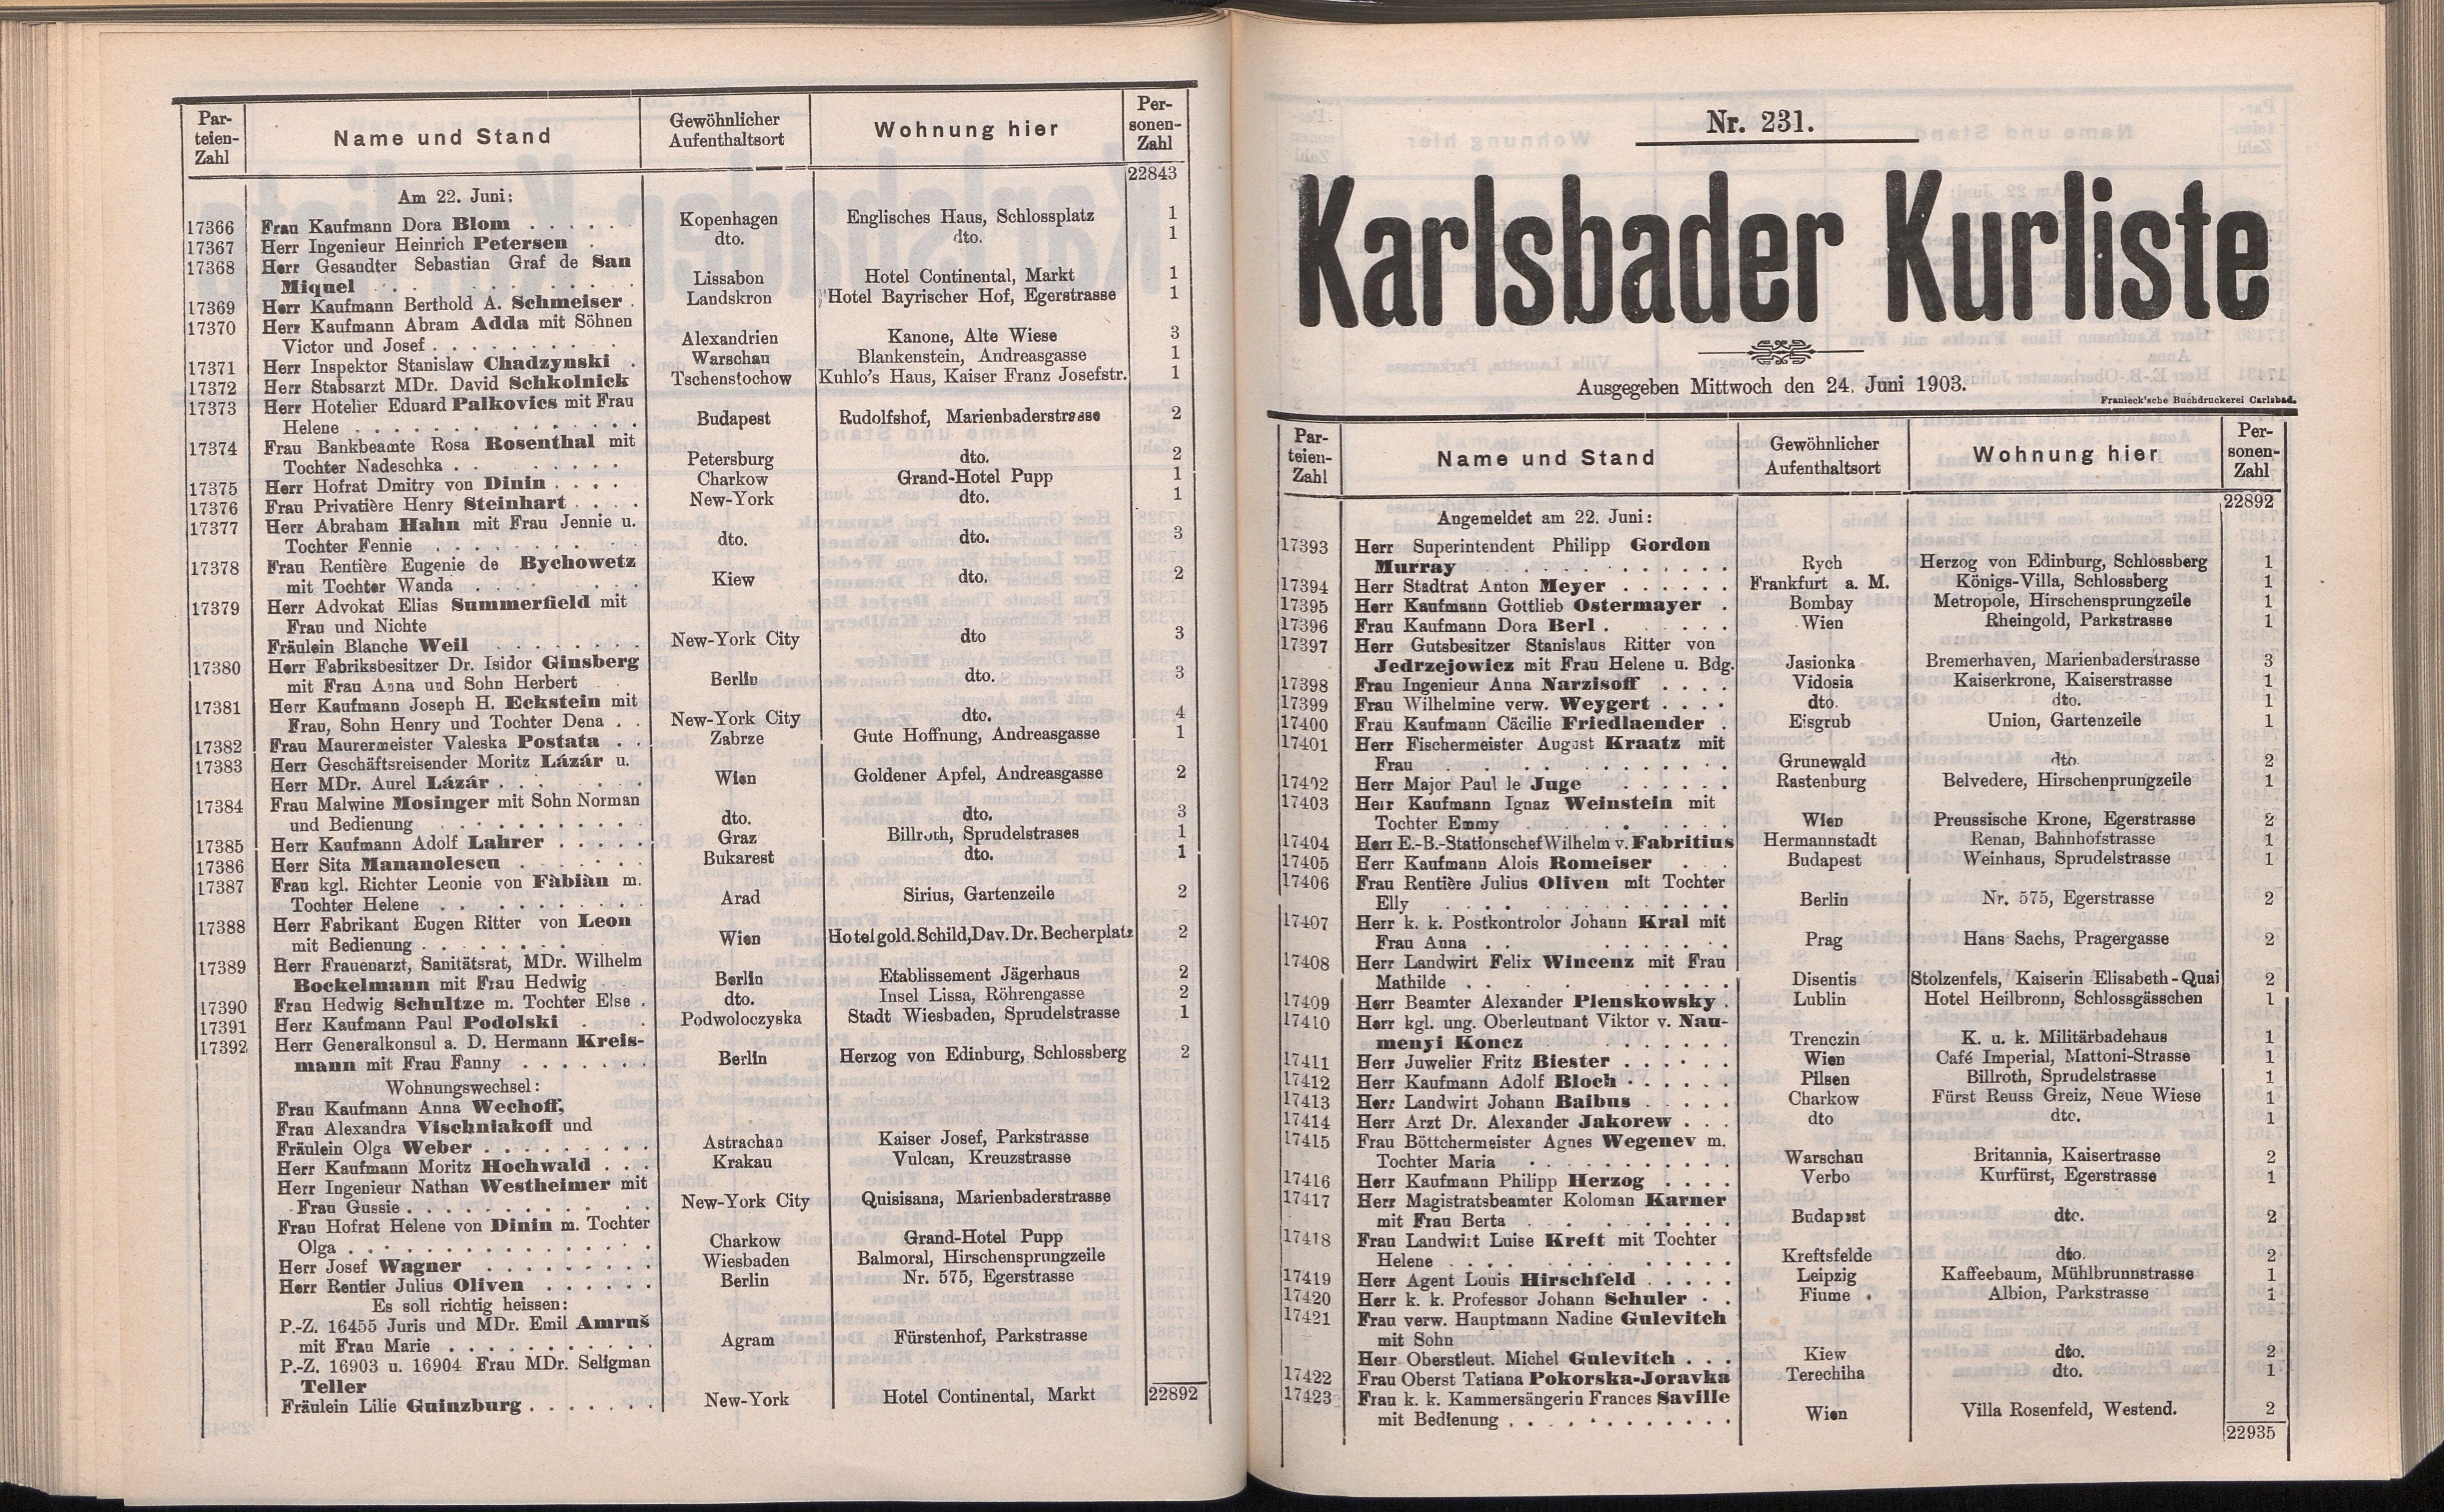 251. soap-kv_knihovna_karlsbader-kurliste-1903_2520